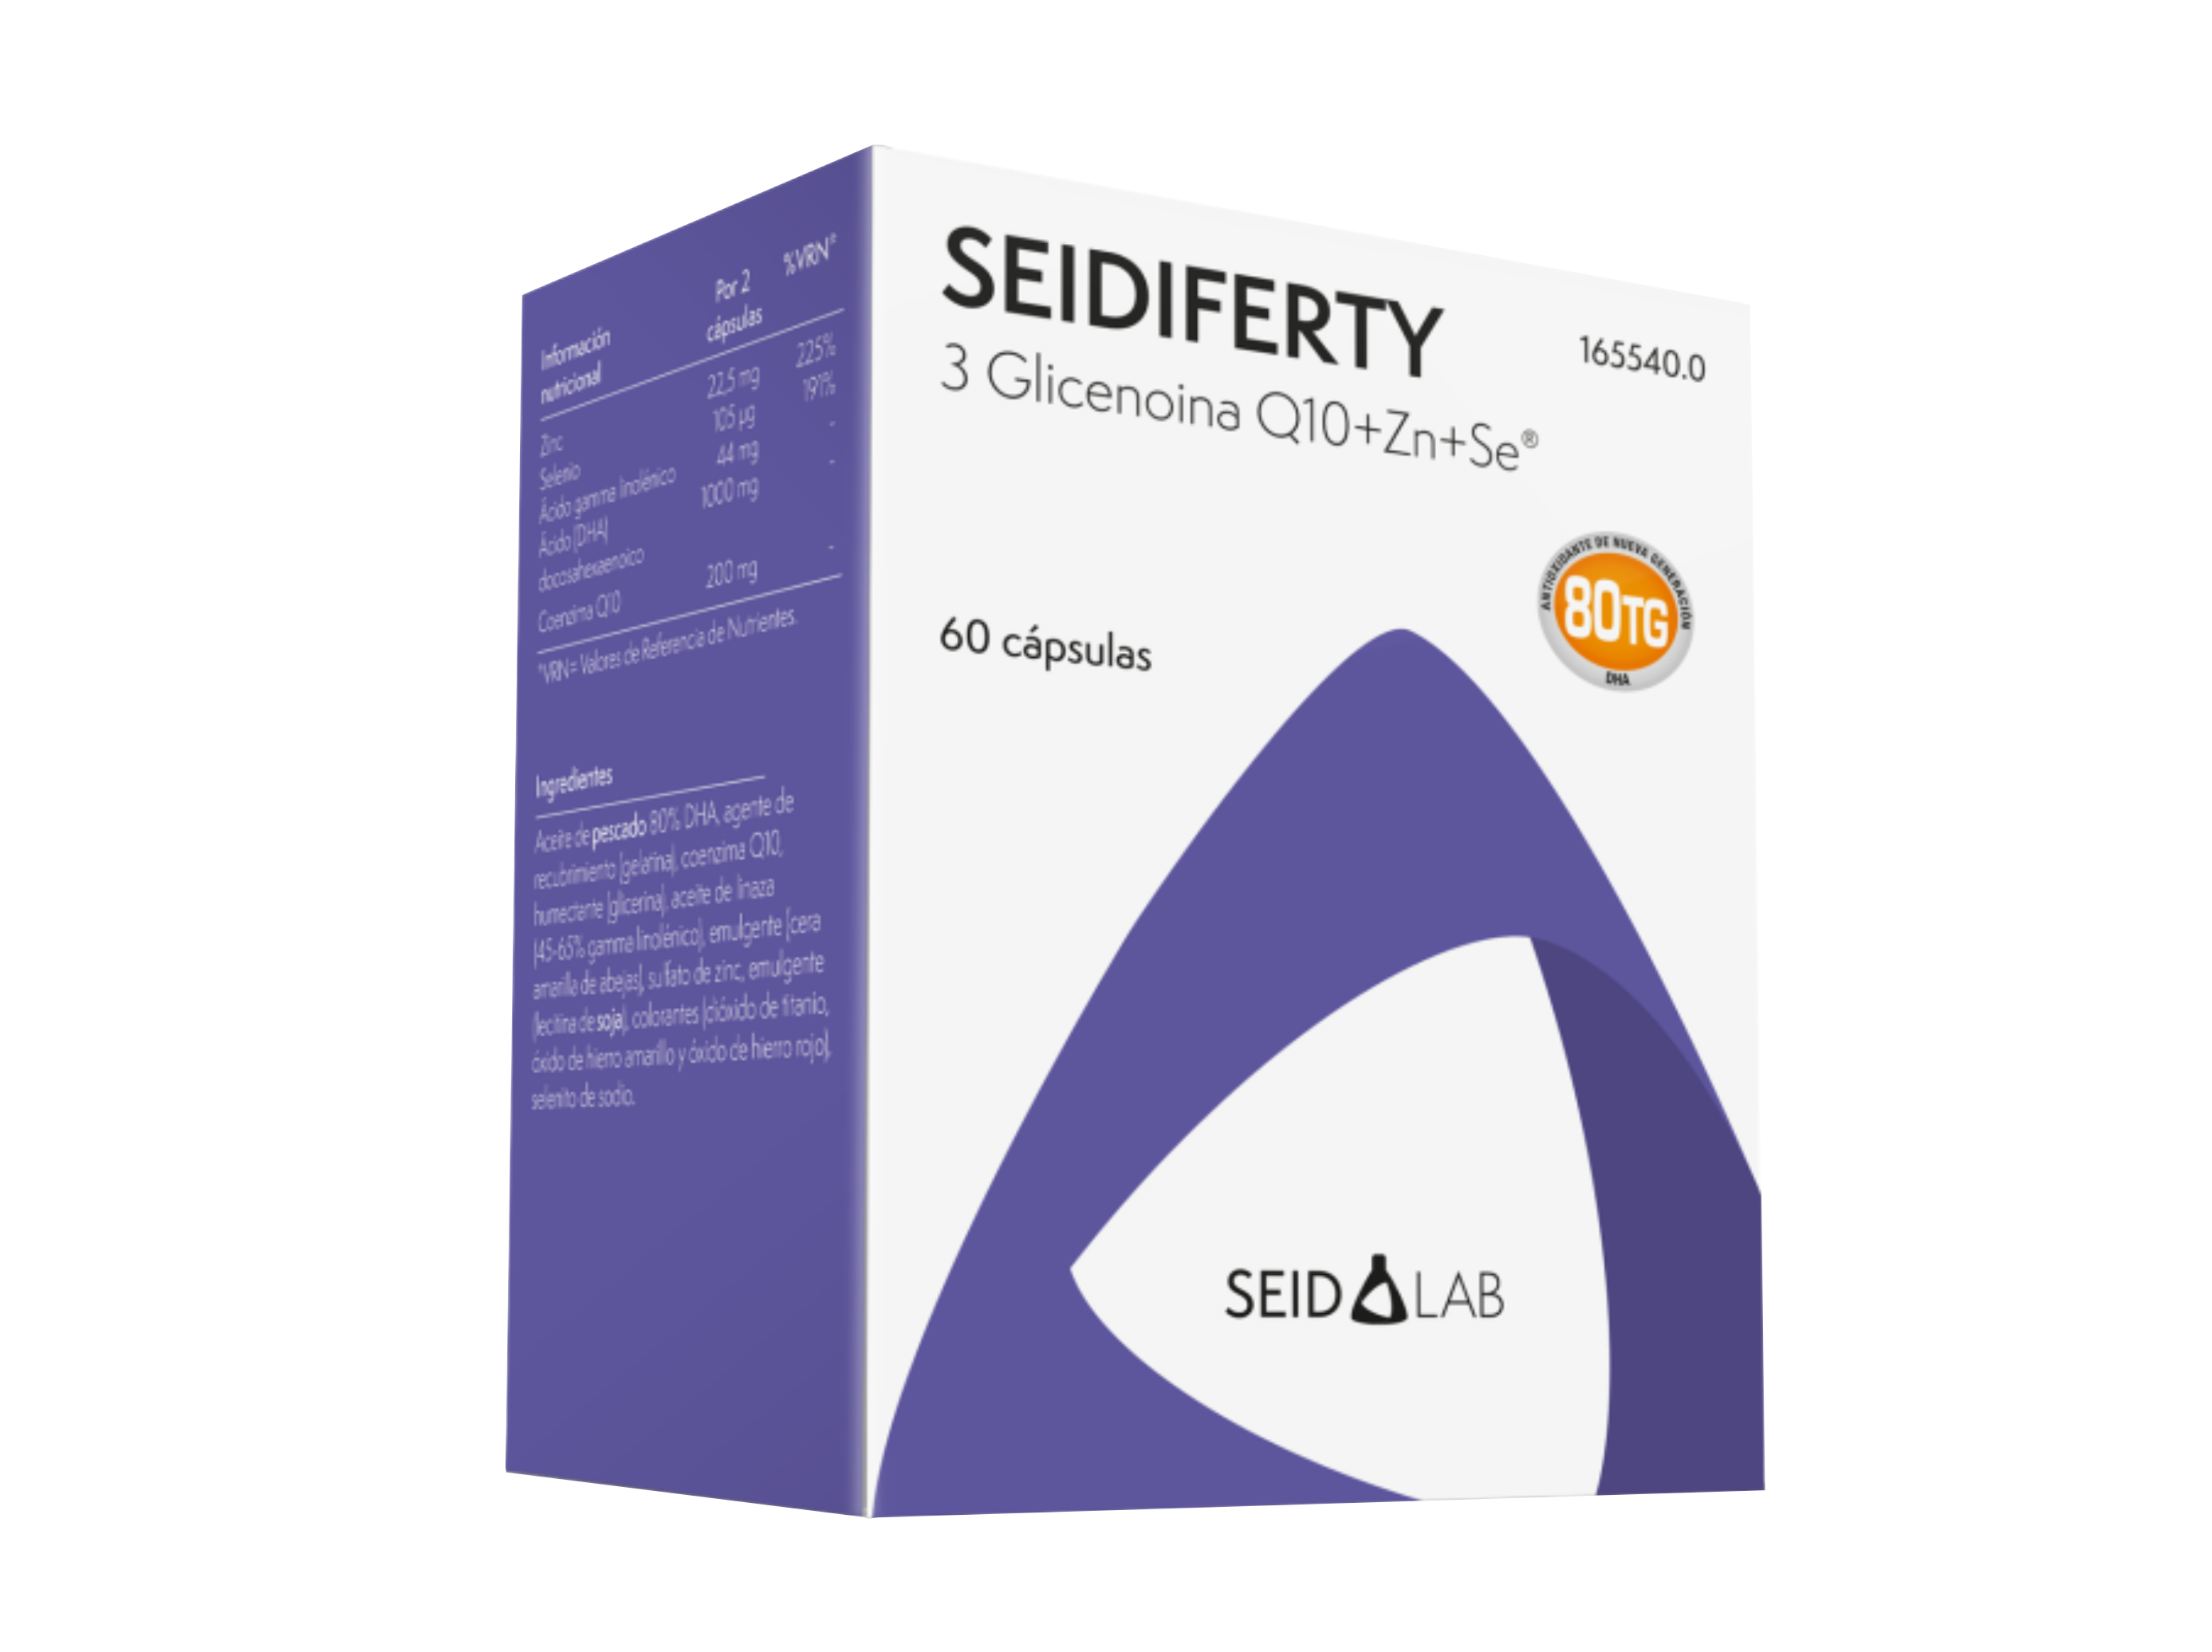 Seidiferty is from SEID Lab Fertility